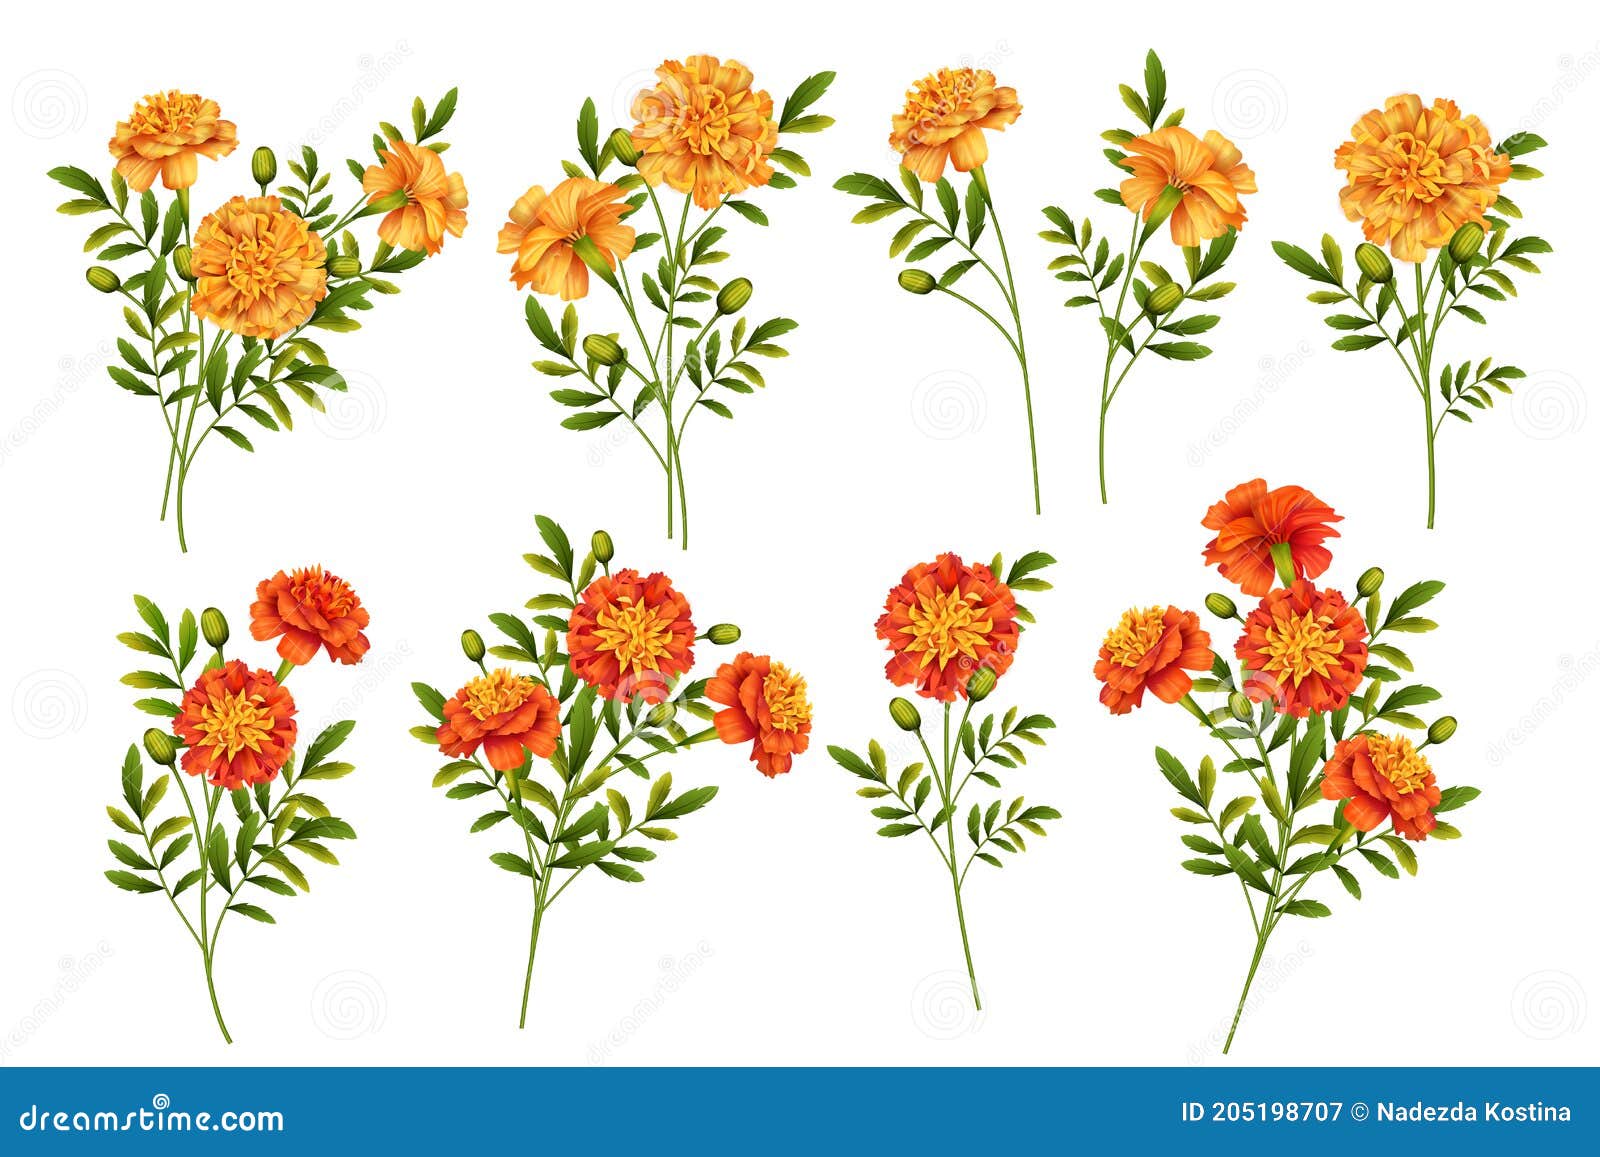 set of marigold flowers